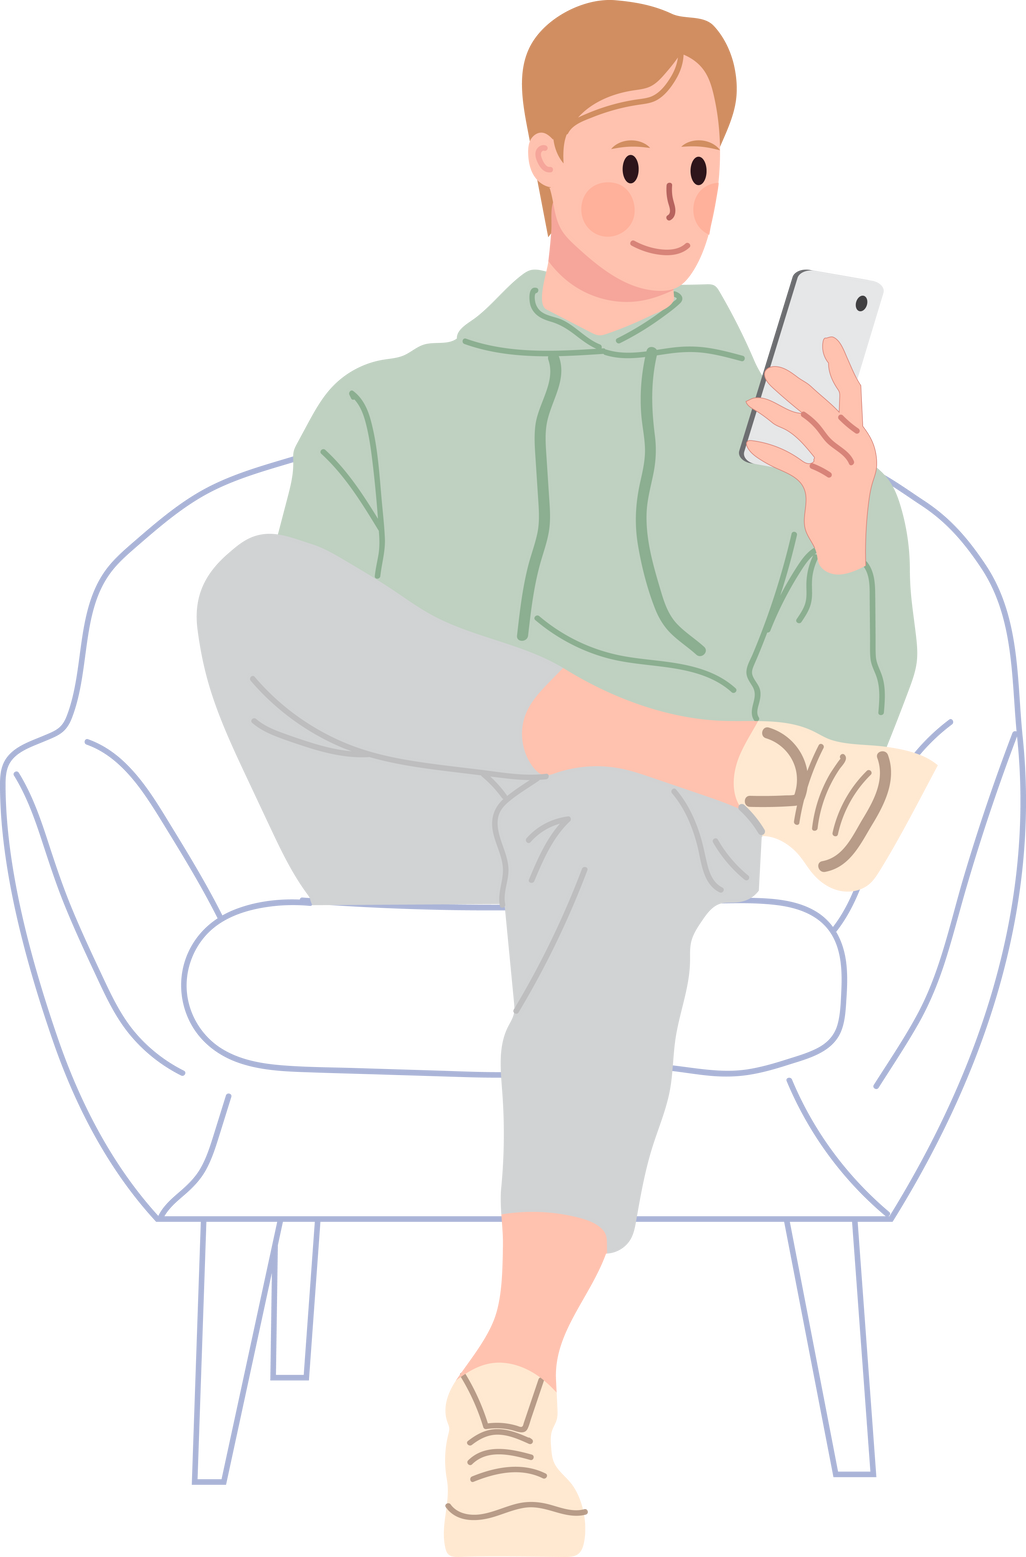 Man Sitting and Using Smart Phone